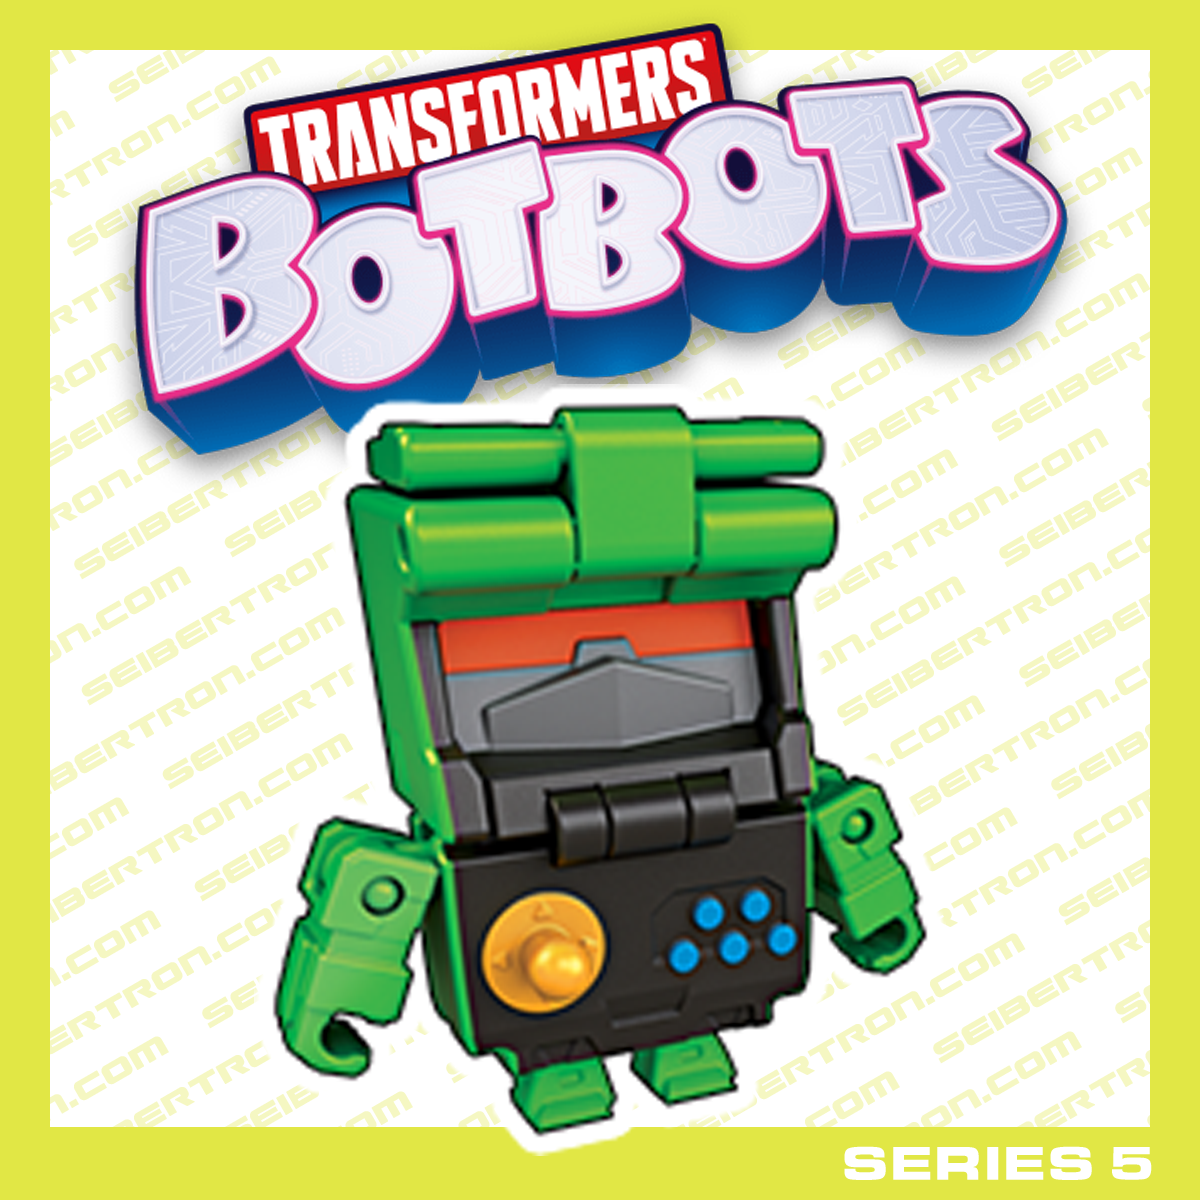 OUTTA ORDER Transformers BotBots Series 5 Retro Replays arcade game Hasbro 2020